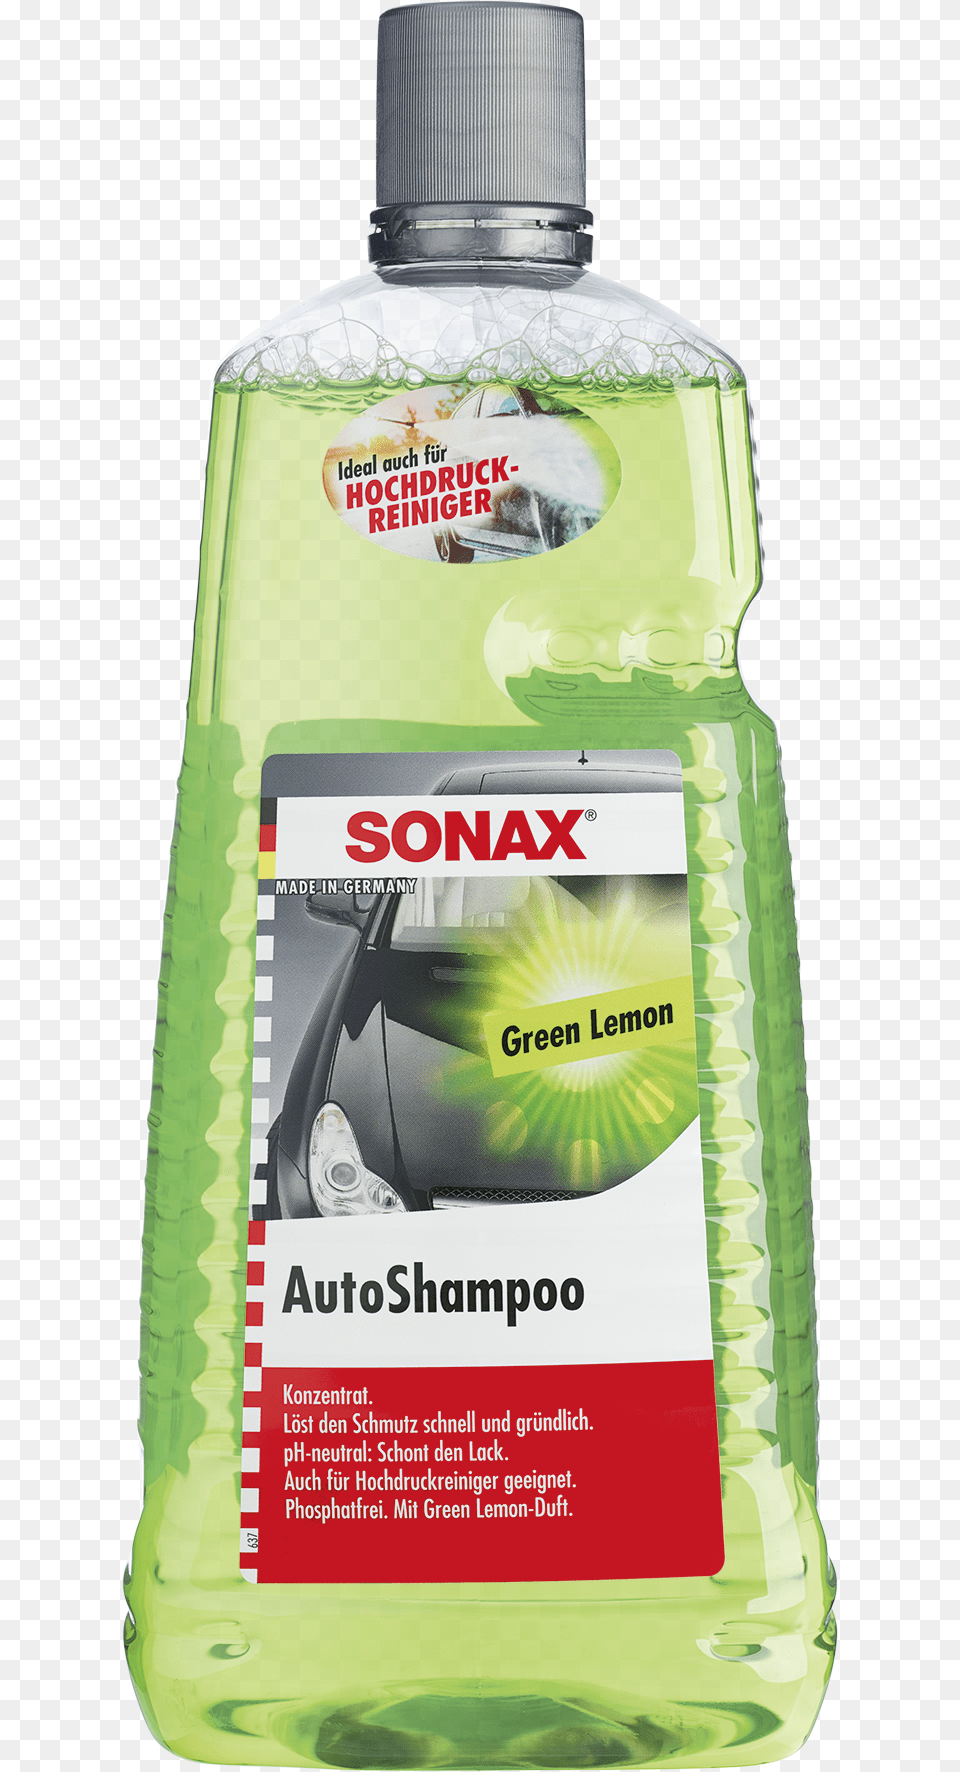 Sonax Green Lemon Shampoo, Bottle, Cosmetics, Perfume Png